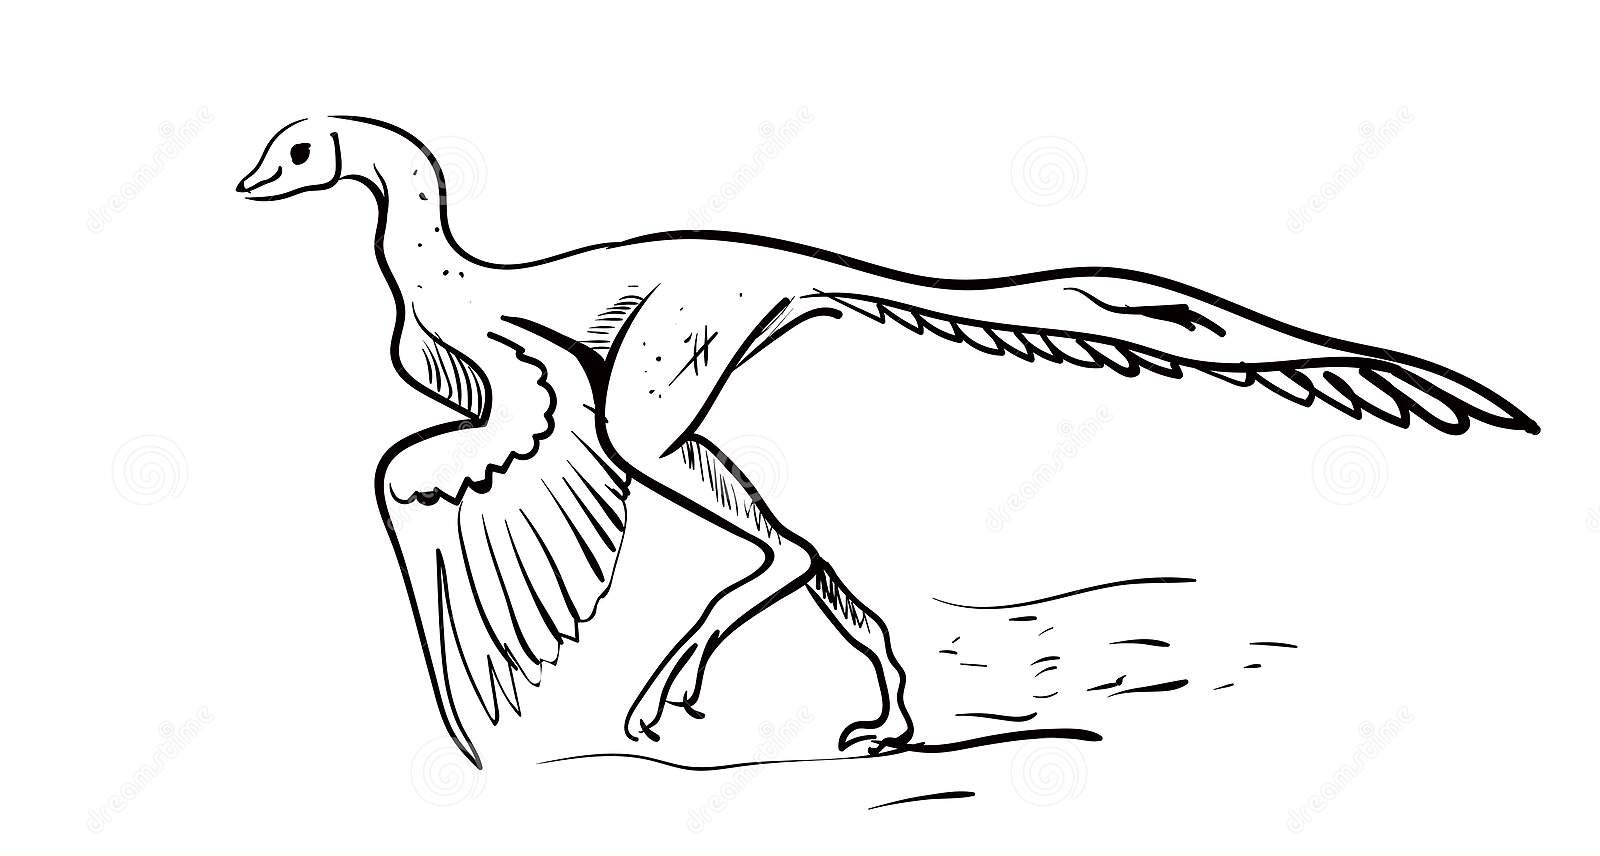 Ilustrador de Archaeopteryx vetor fundo branco de Archaeopteryx